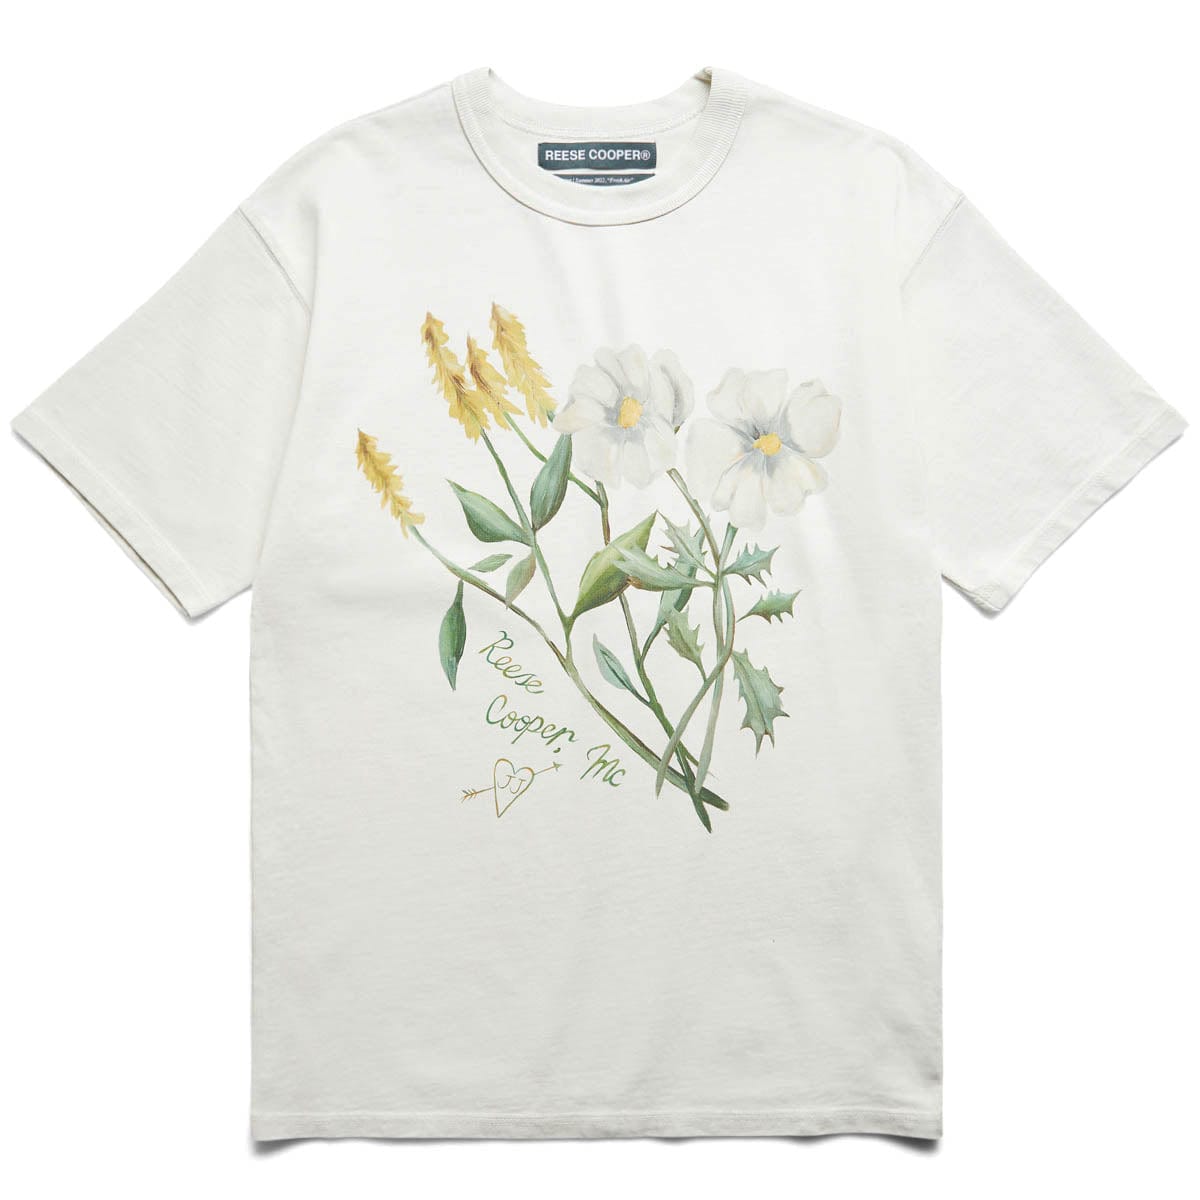 Reese Cooper T-Shirts JULIET JOHNSTONE COLLABORATION T-SHIRT